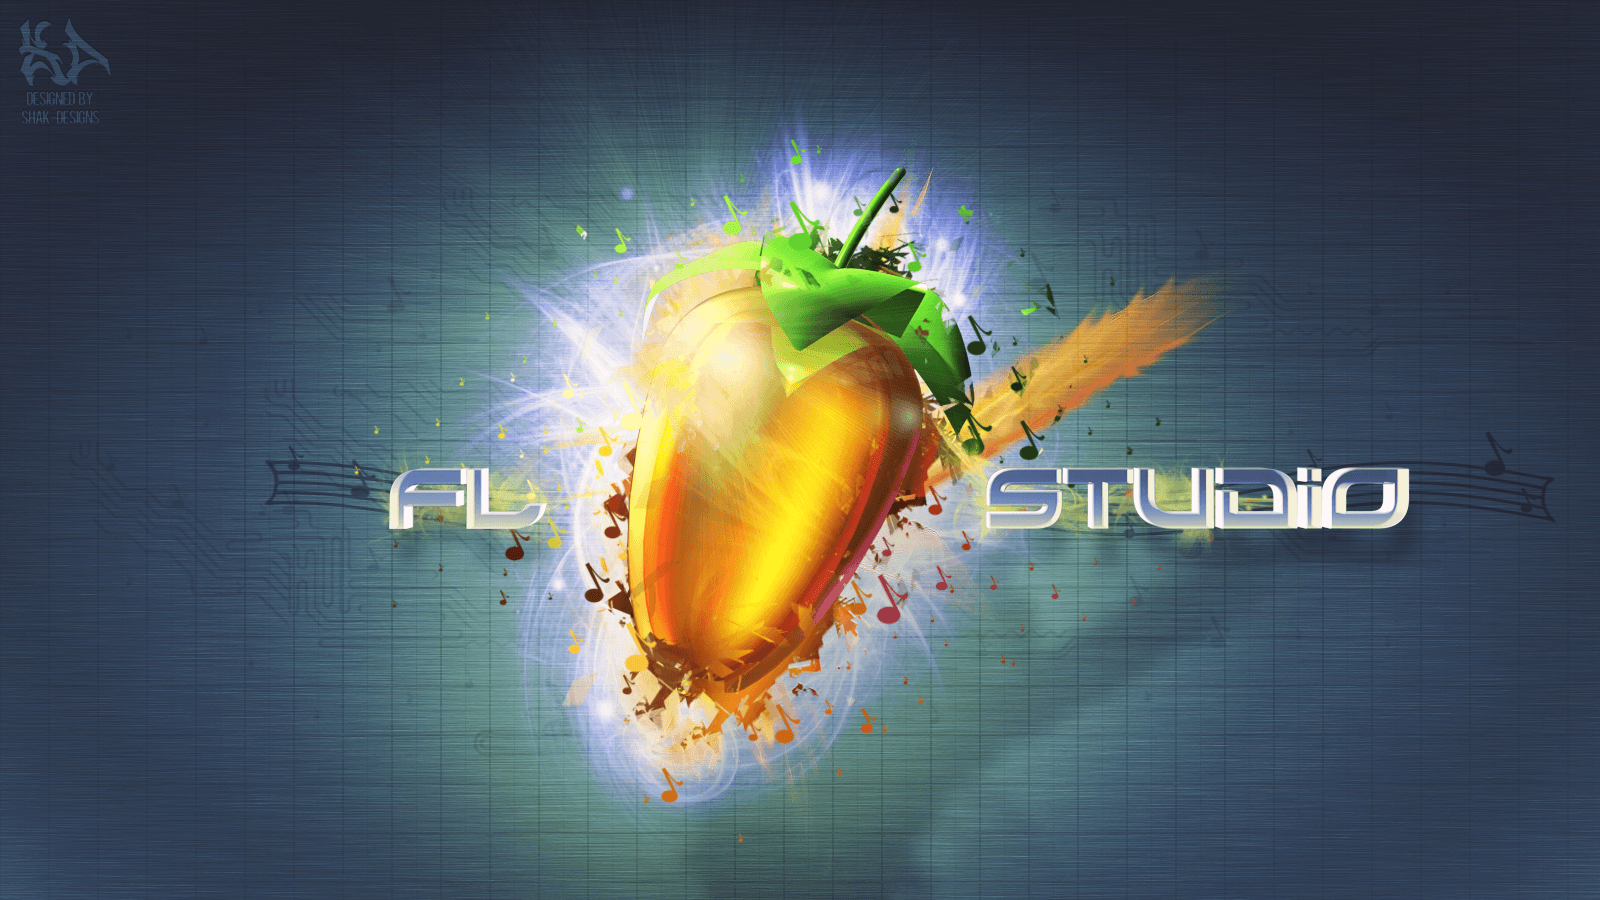 FL Studio Wallpaper and Background